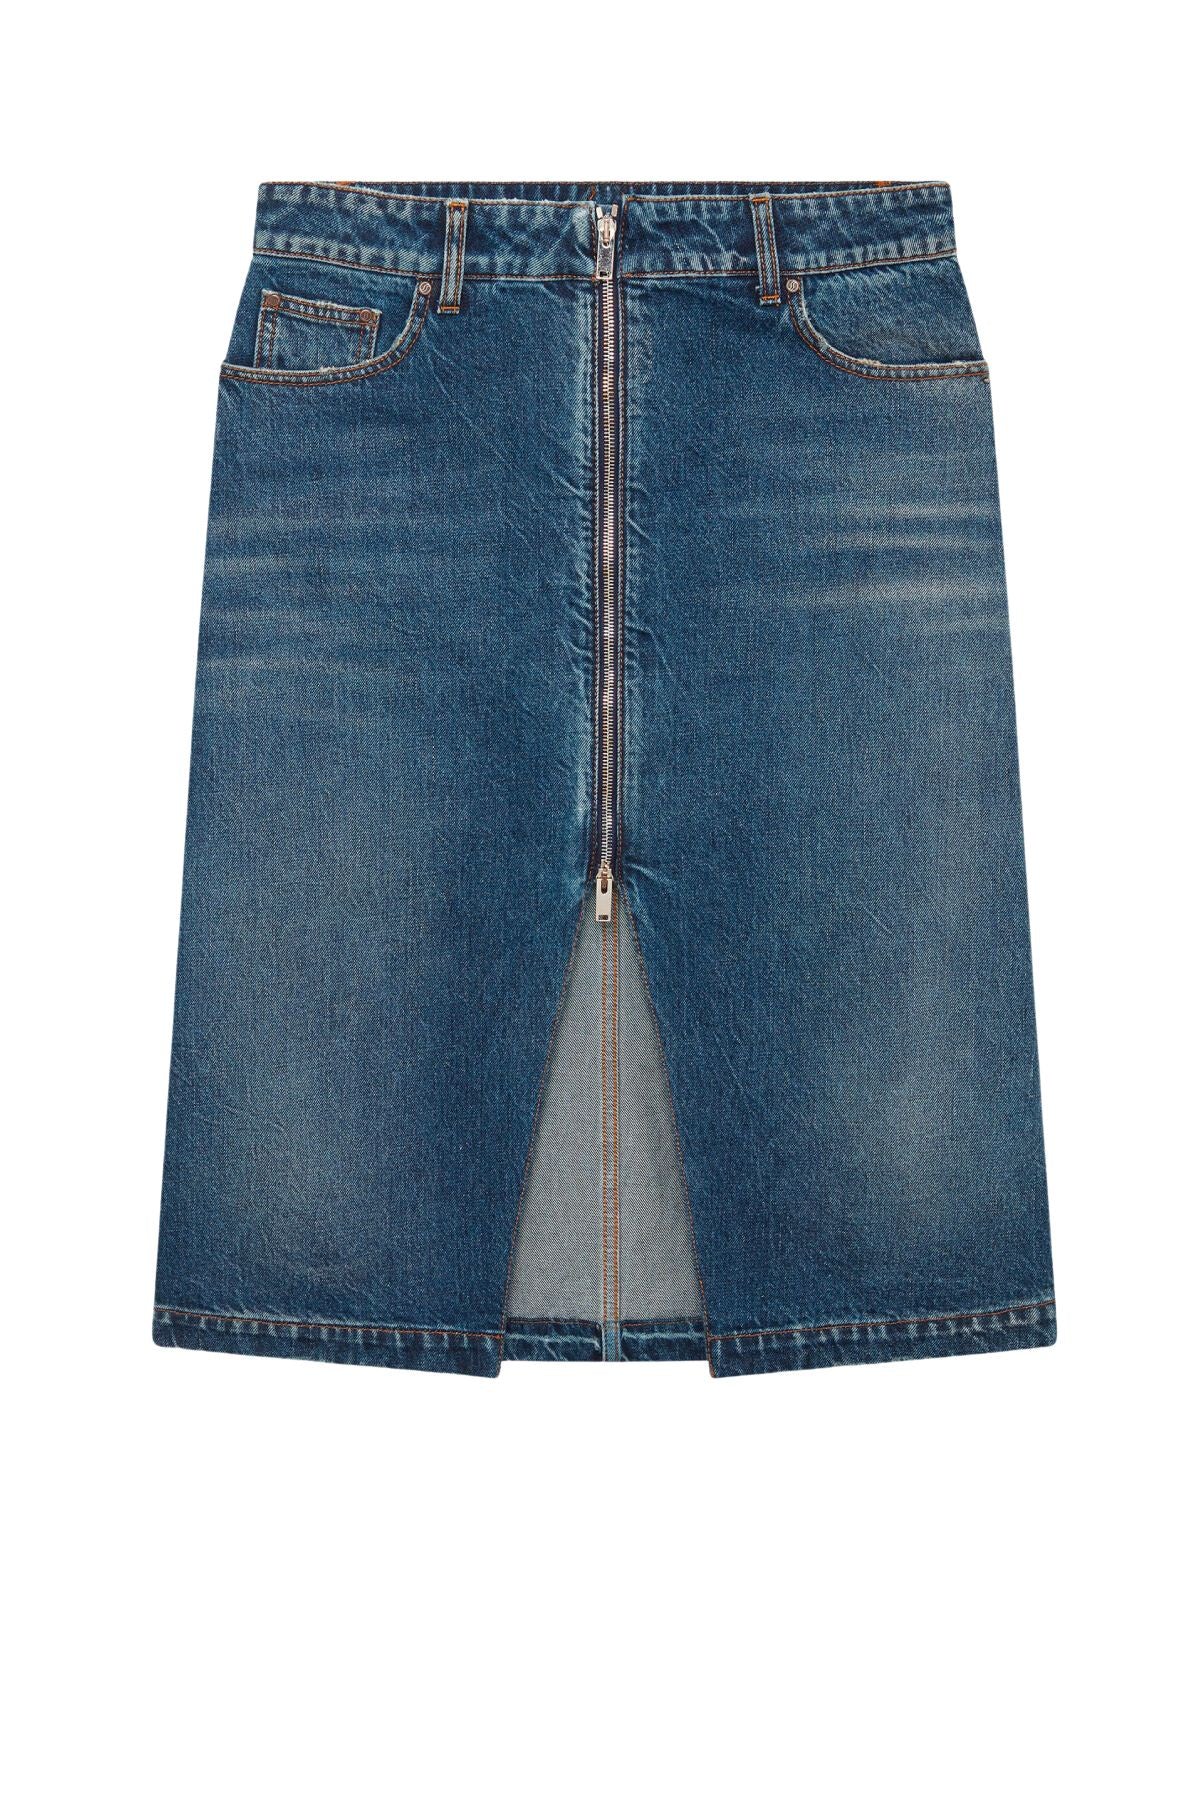 Stella McCartney Front Split Zip Denim Midi Skirt - Vintage Wash